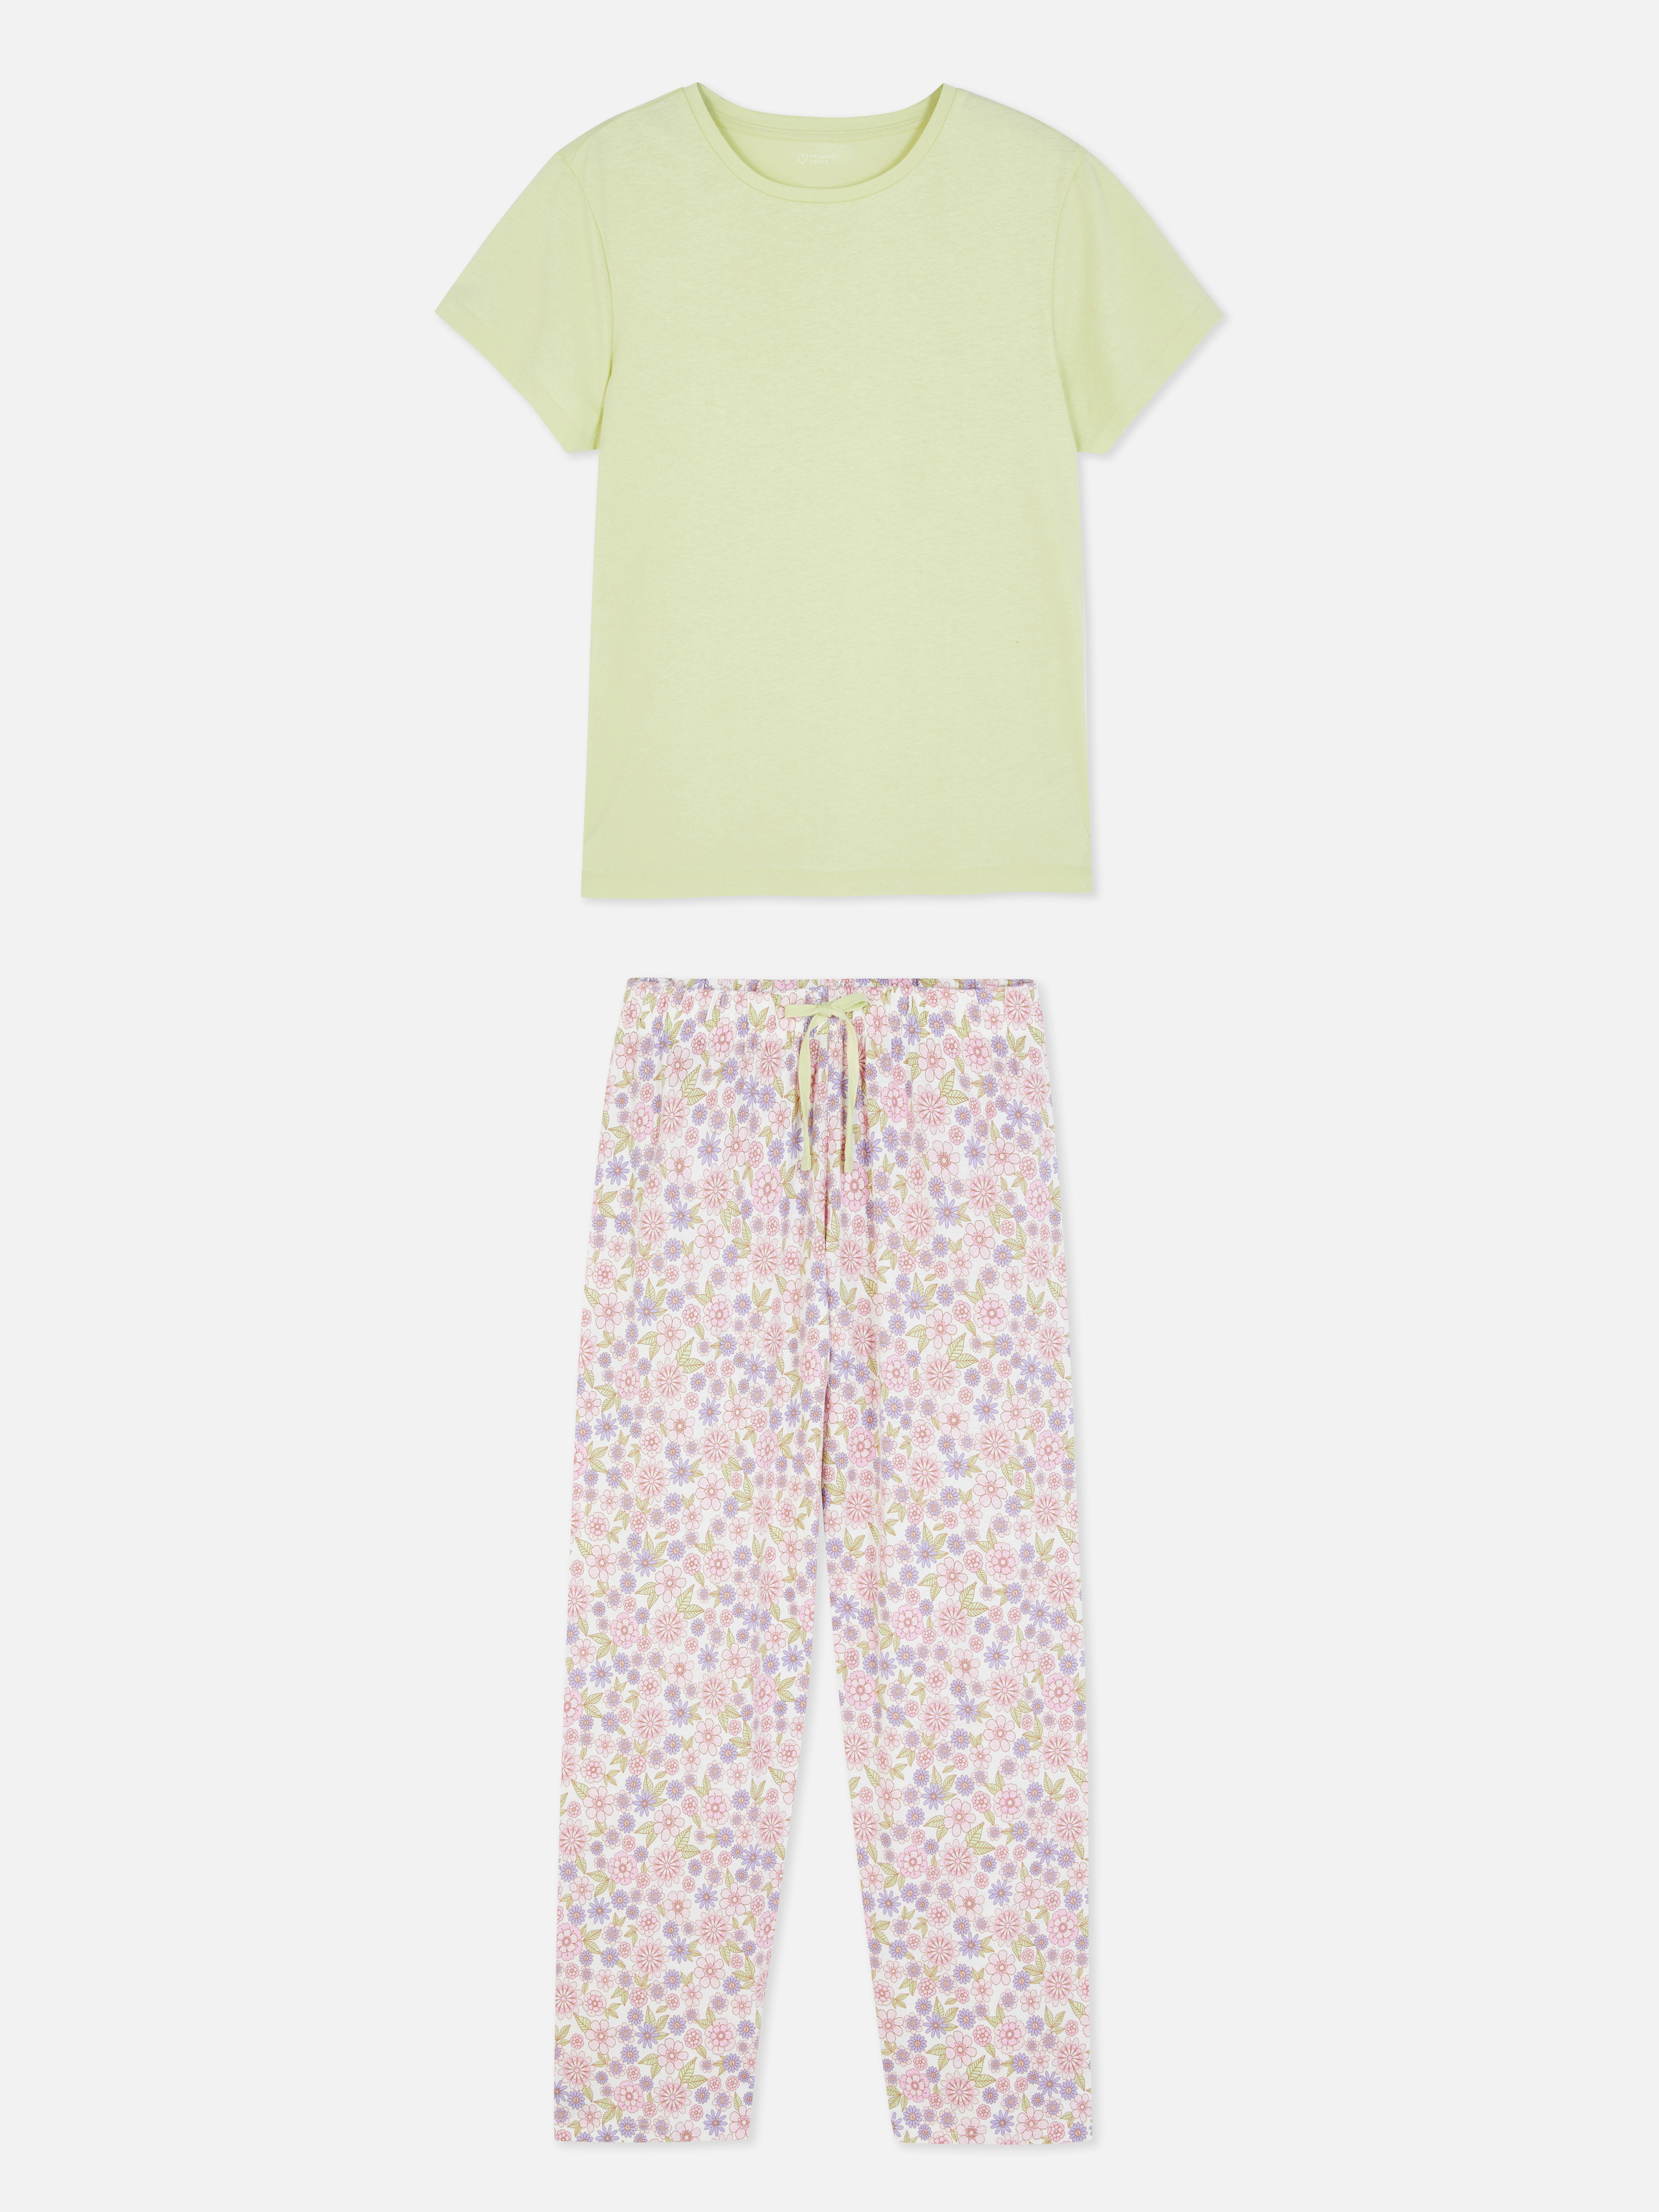 Patterned Pajama Set